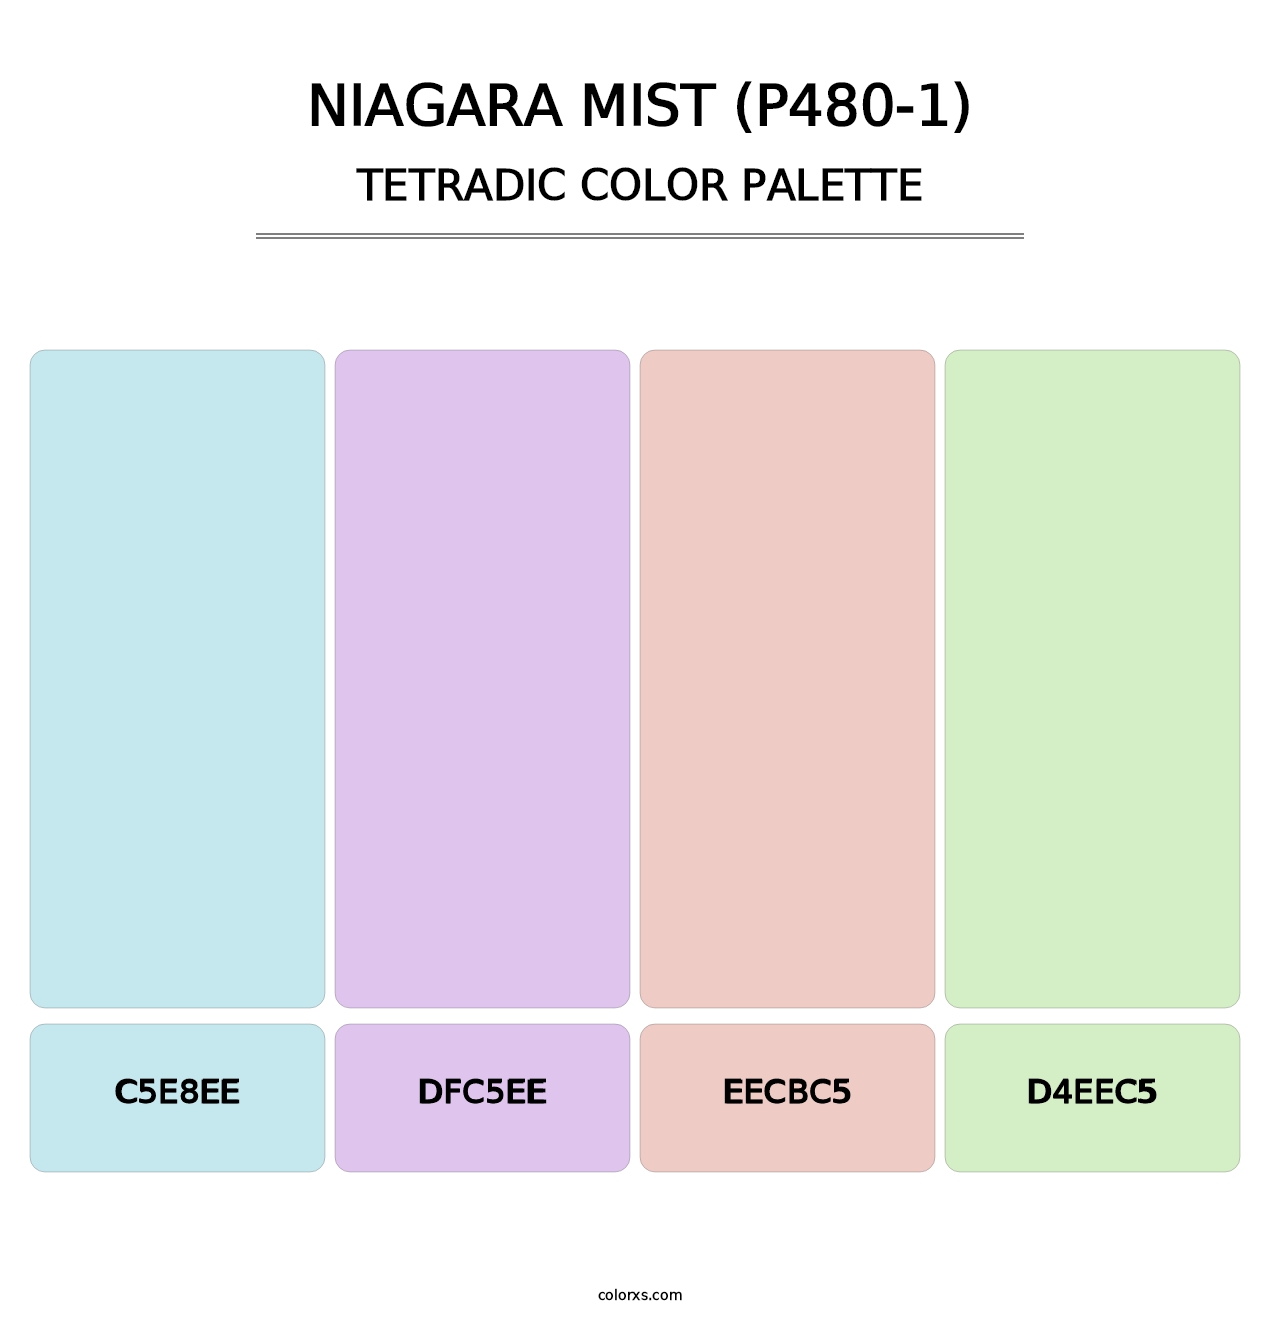 Niagara Mist (P480-1) - Tetradic Color Palette